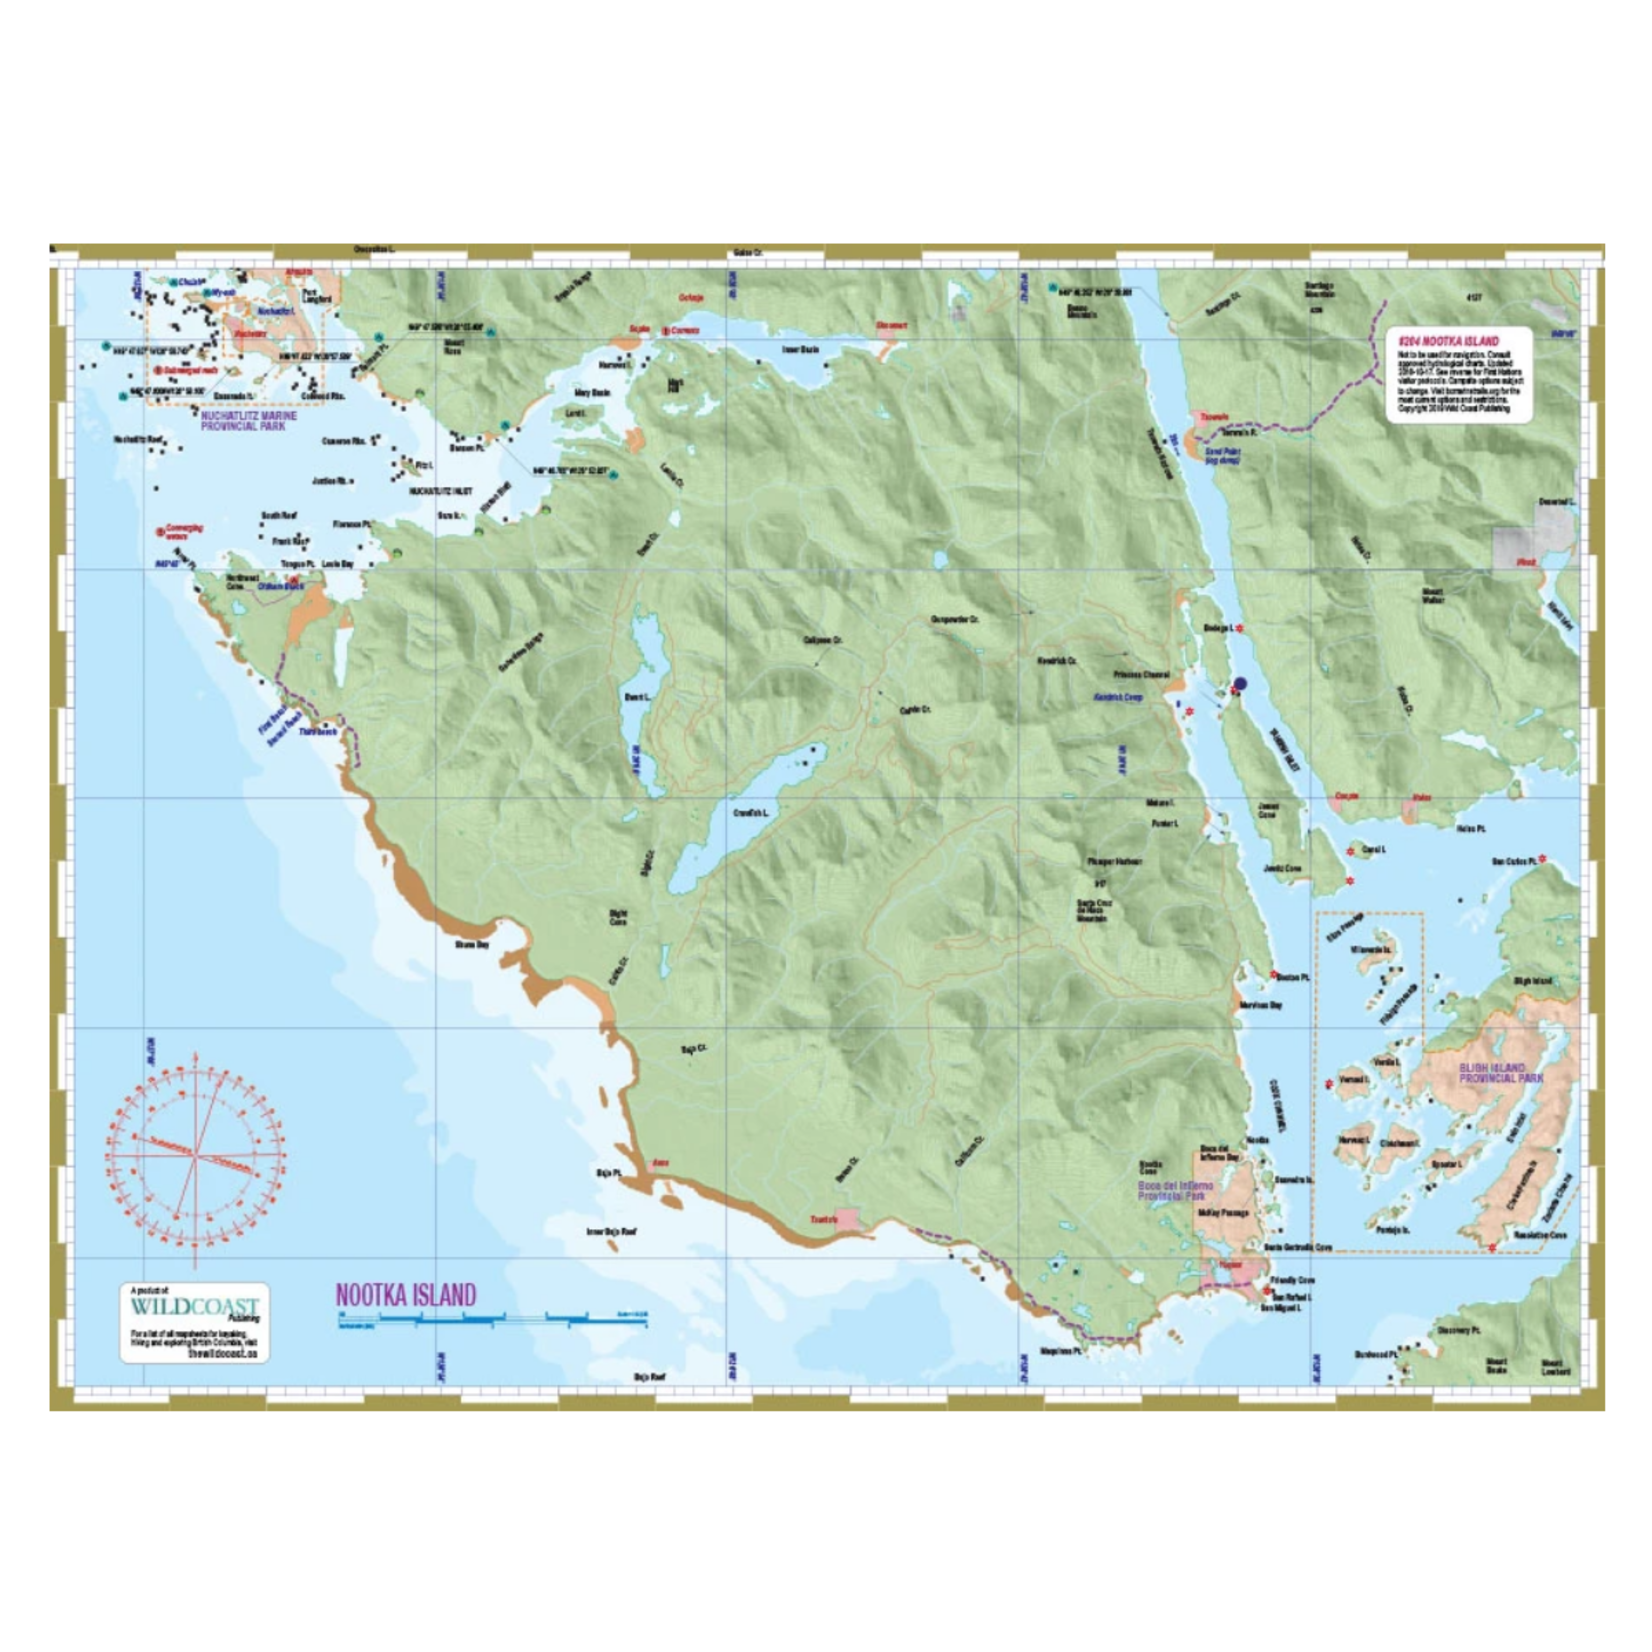 WildCoast - 204- Nootka Island